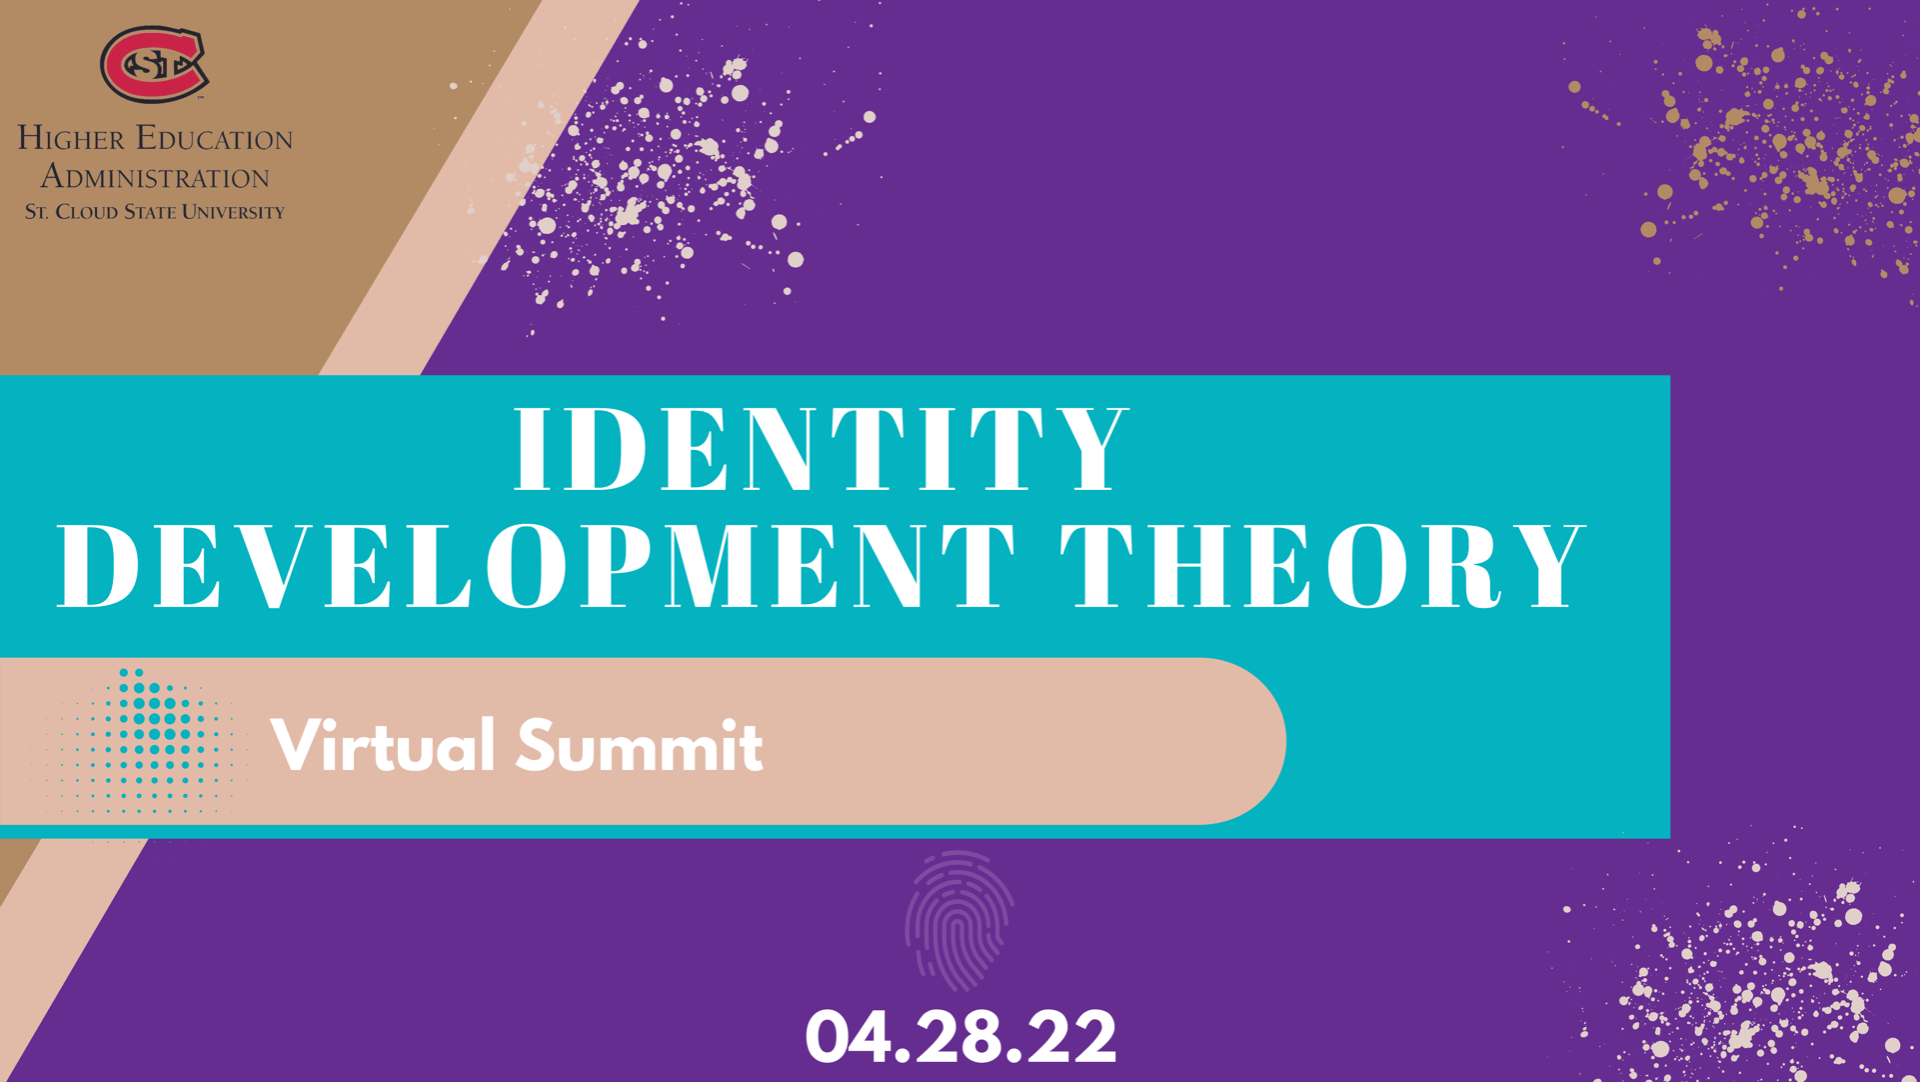 Introducing: the Identity Development Theory Virtual Summit